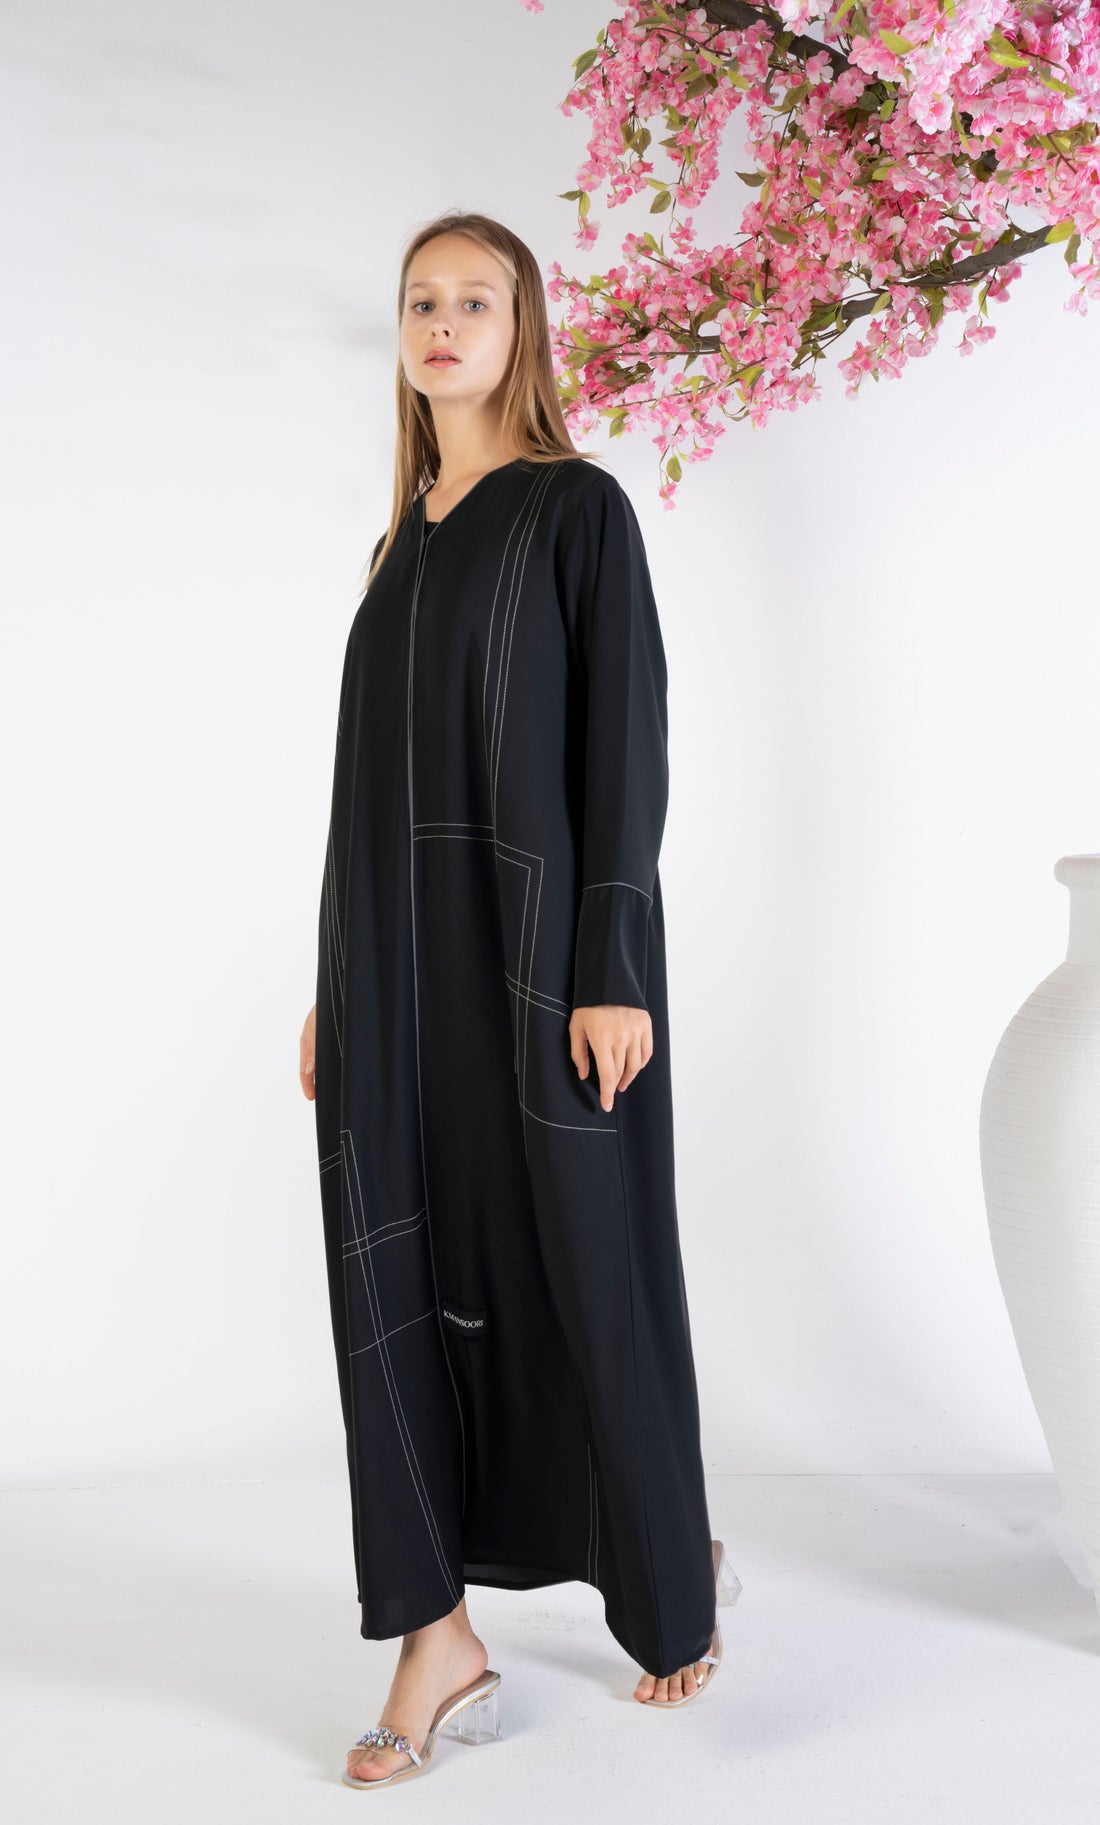 Unveiling Elegance: Introducing K Mansoori's K993BL-RM Ready-to-Wear Abaya